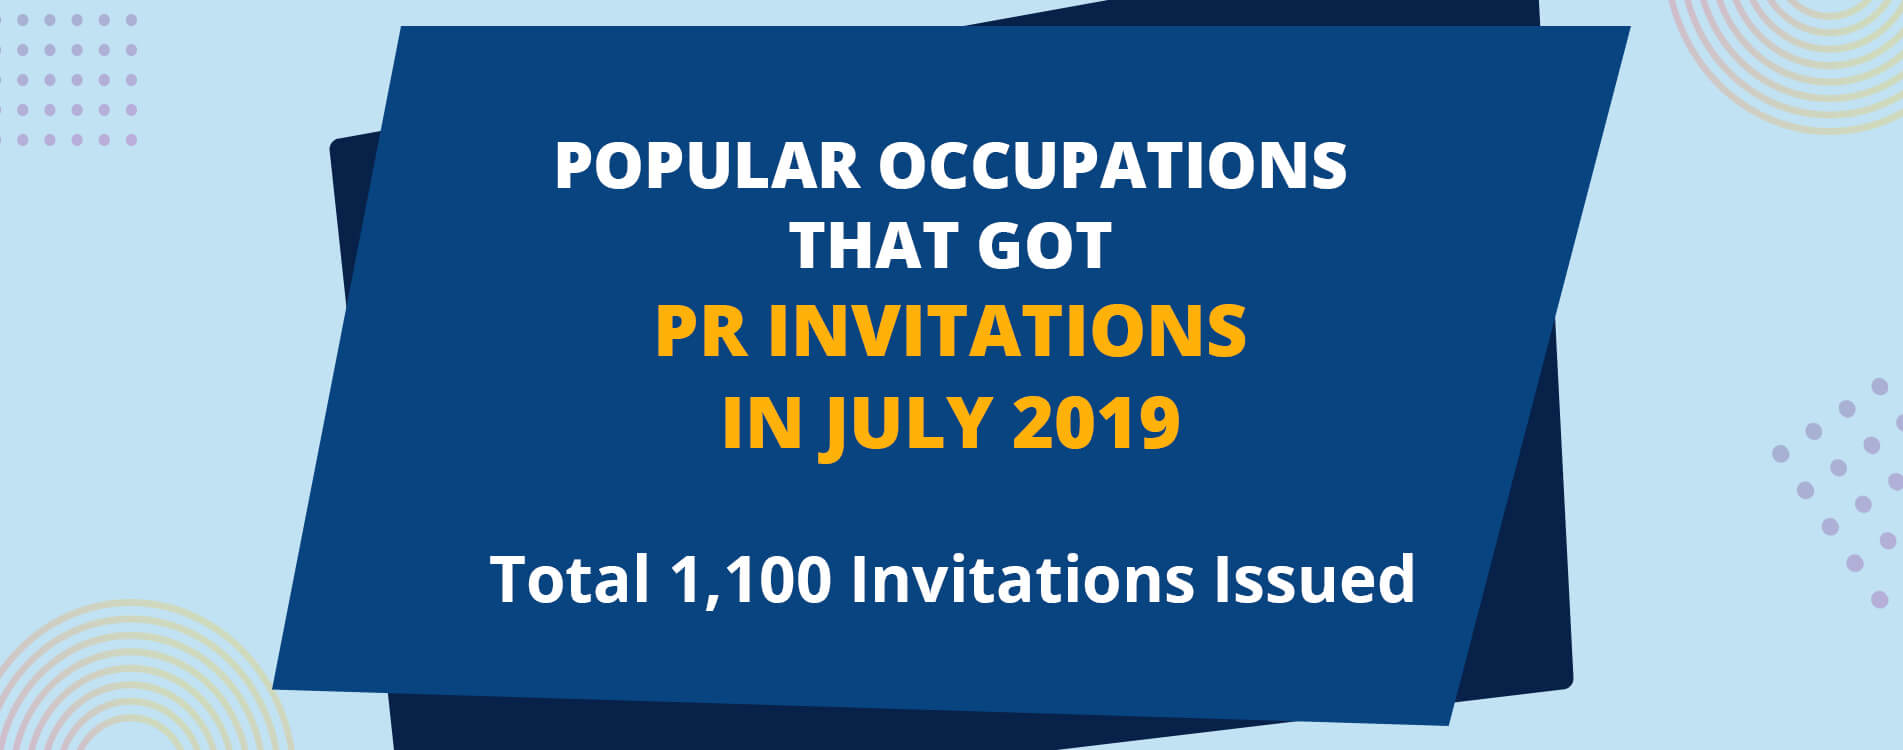 POPULAR OCCUPATIONS THAT GOT PR INVITATIONS IN JULY 2019